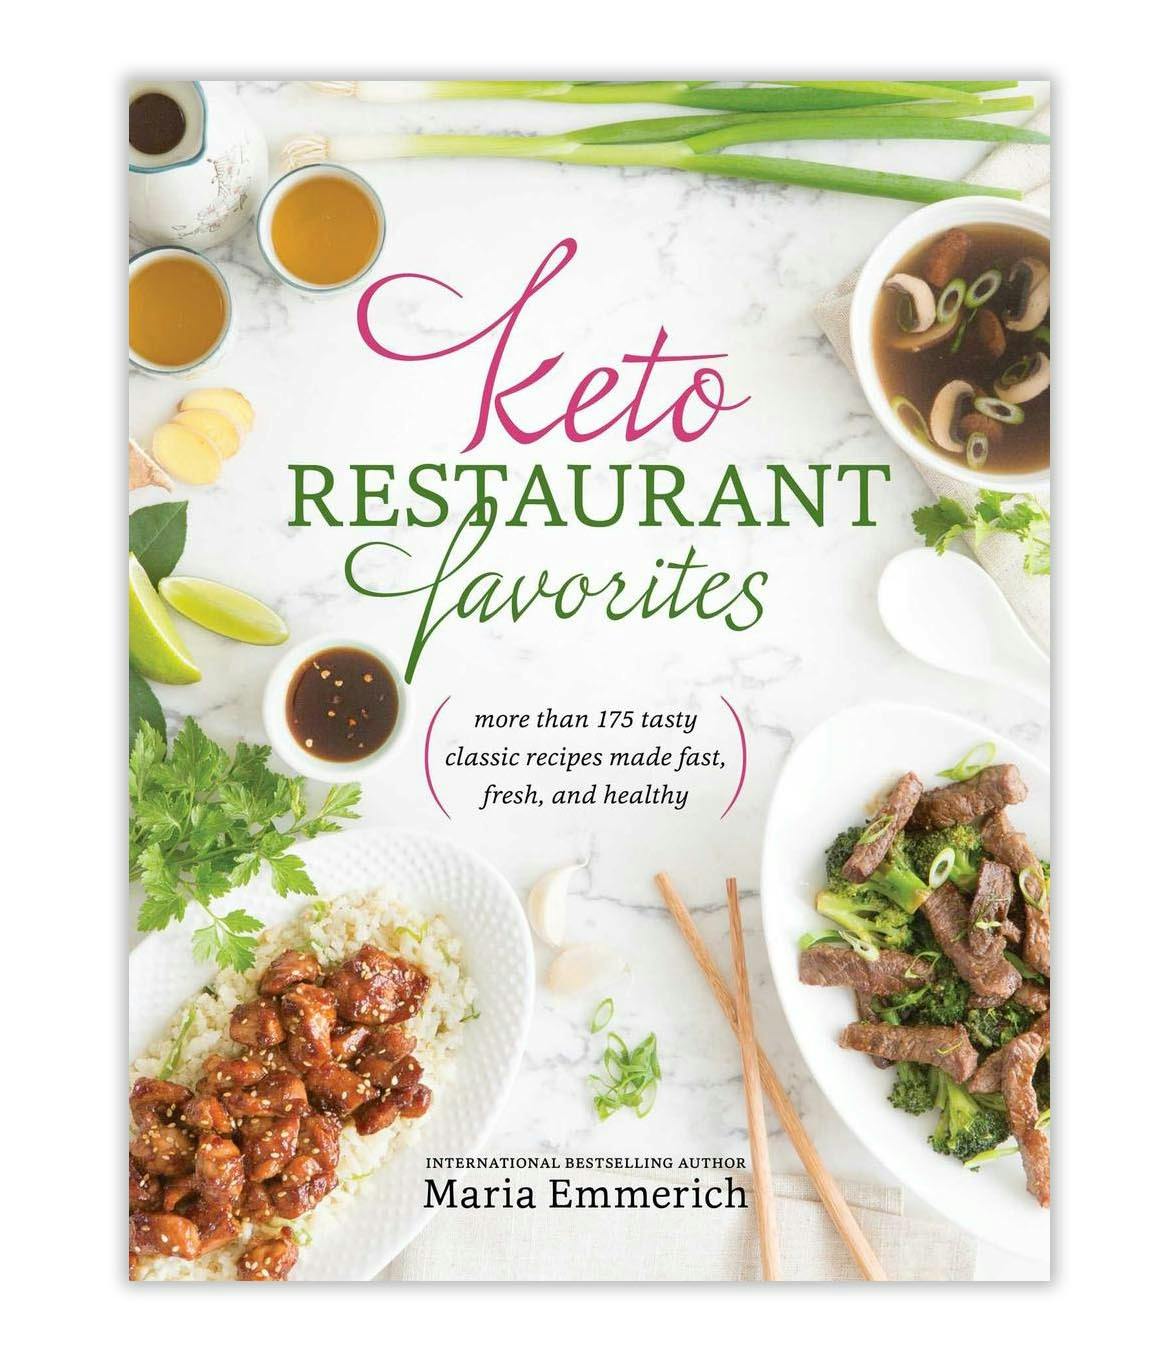 https://i.dietdoctor.com/wp-content/uploads/2017/10/keto-restaurant-favorites-1.jpg?auto=compress%2Cformat&w=1174&h=1358&fit=crop